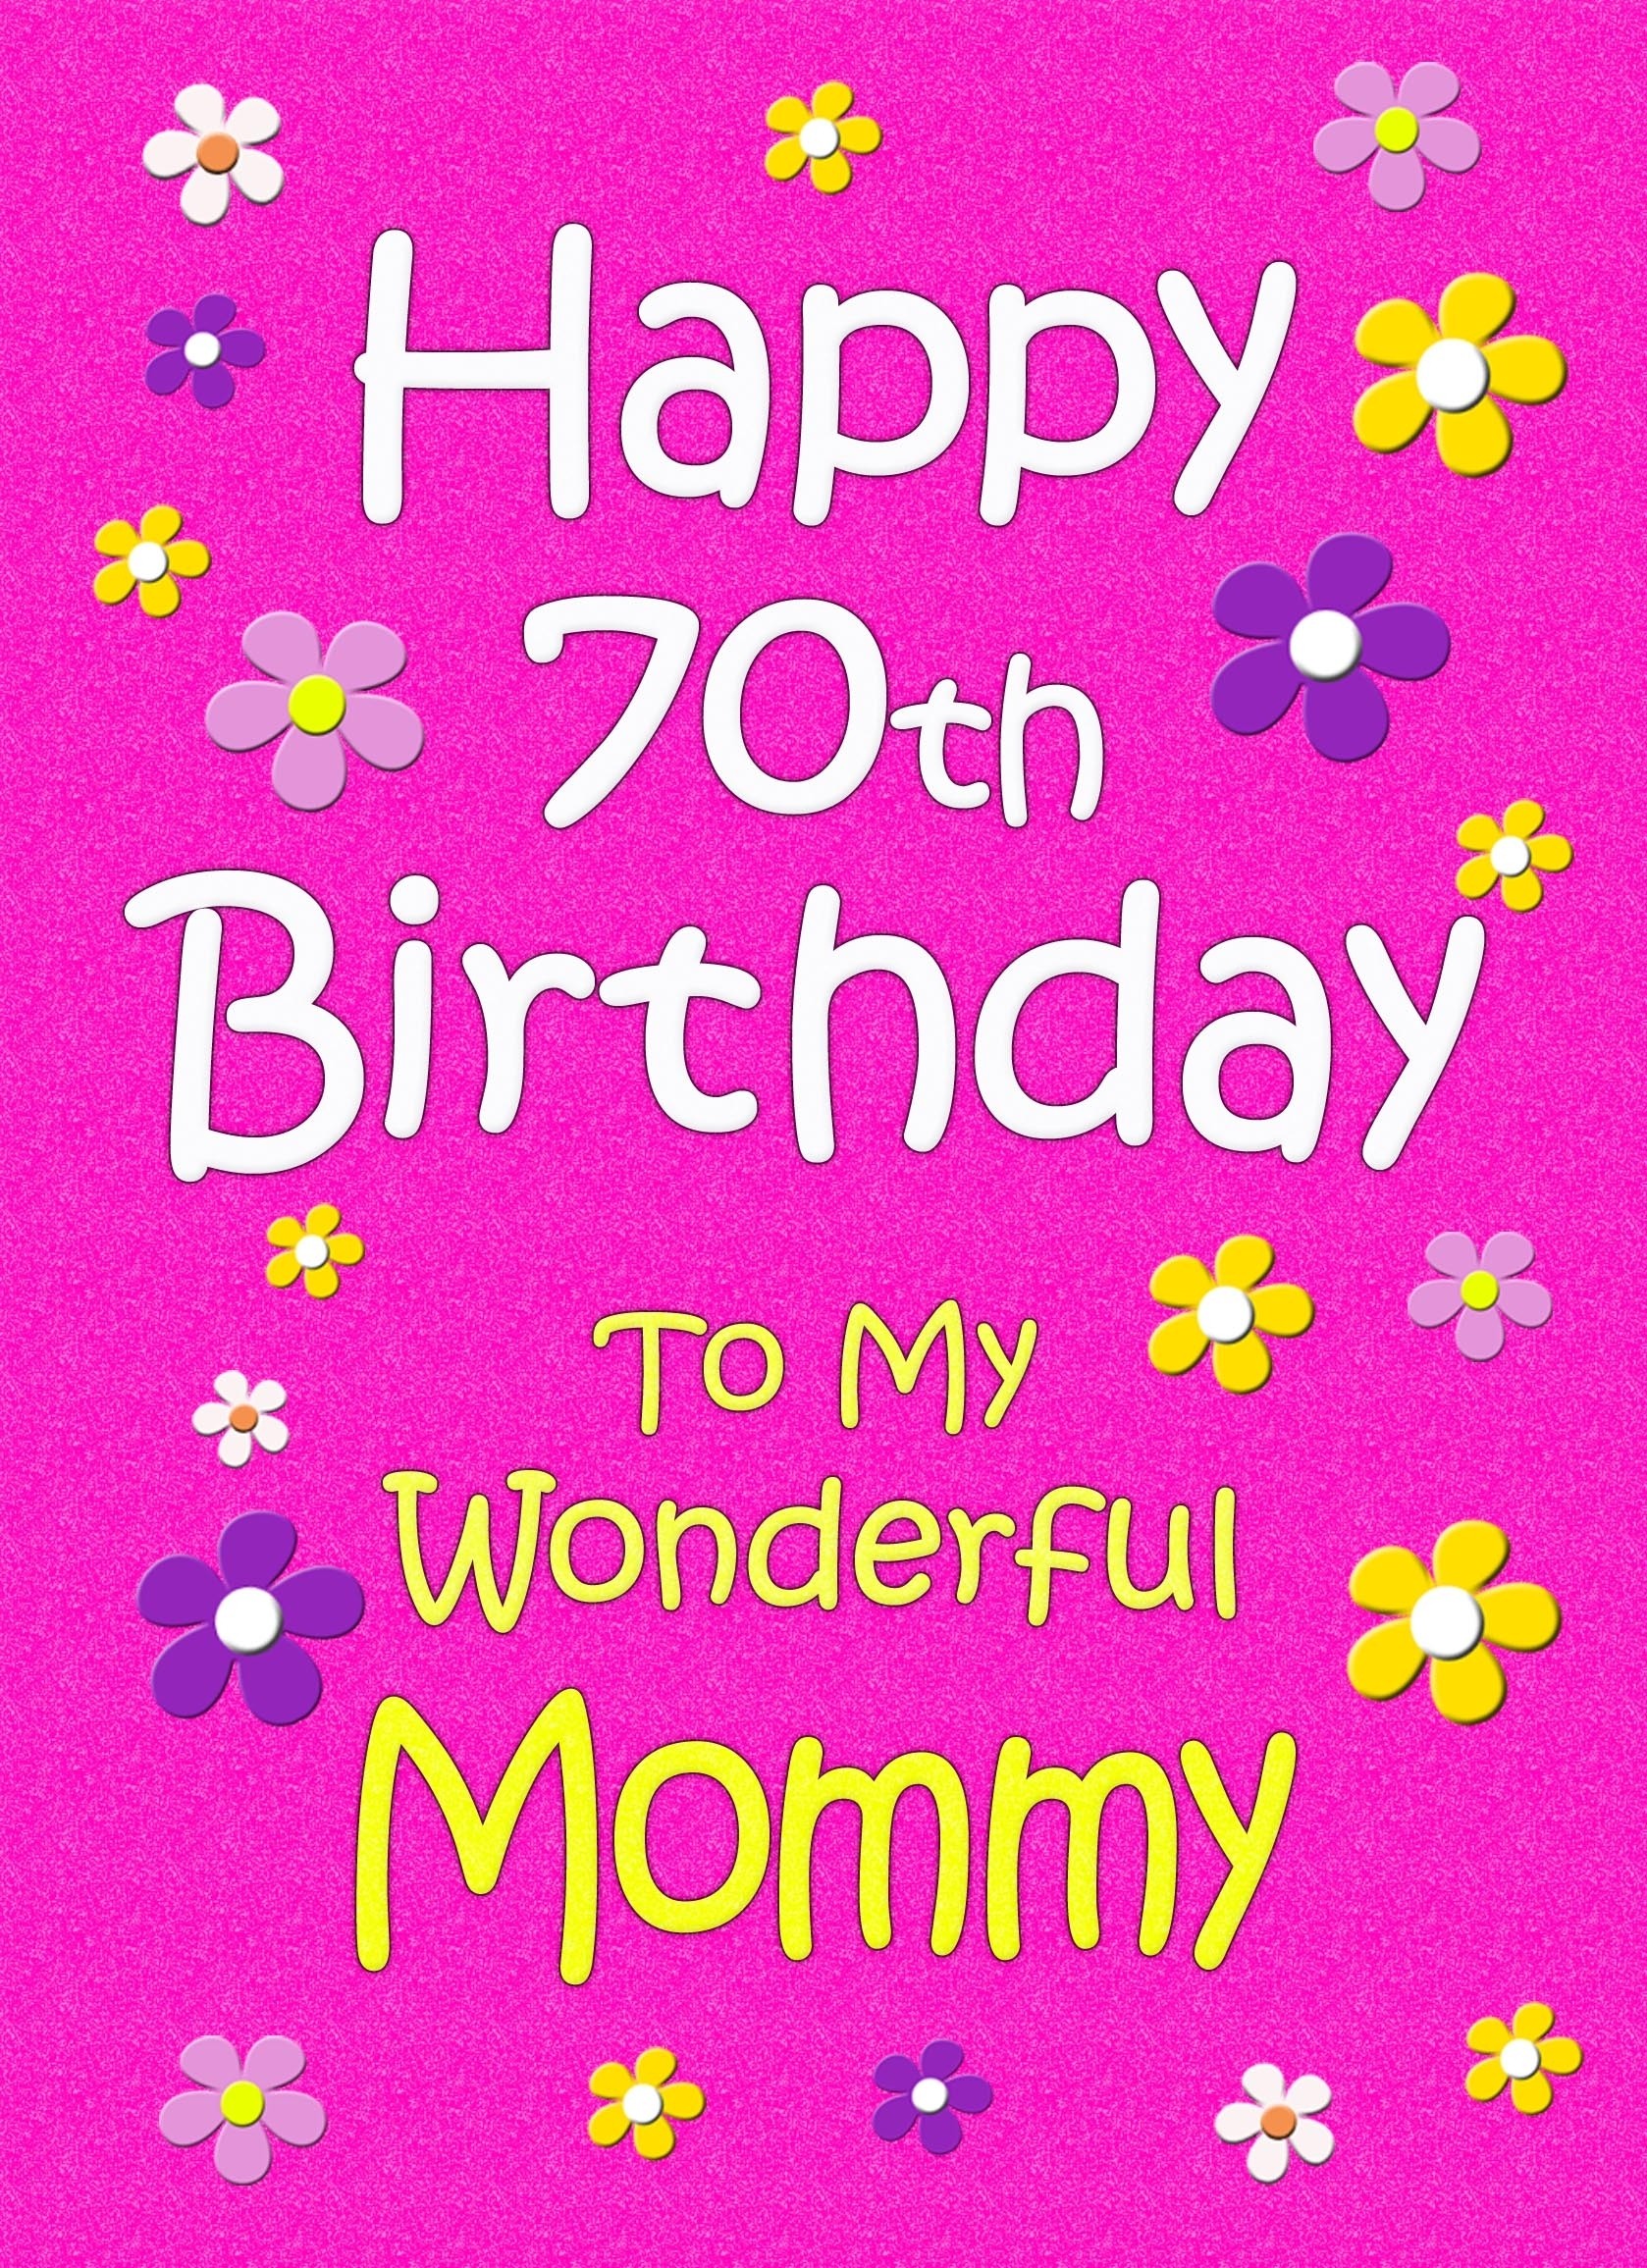 Mommy 70th Birthday Card (Pink)